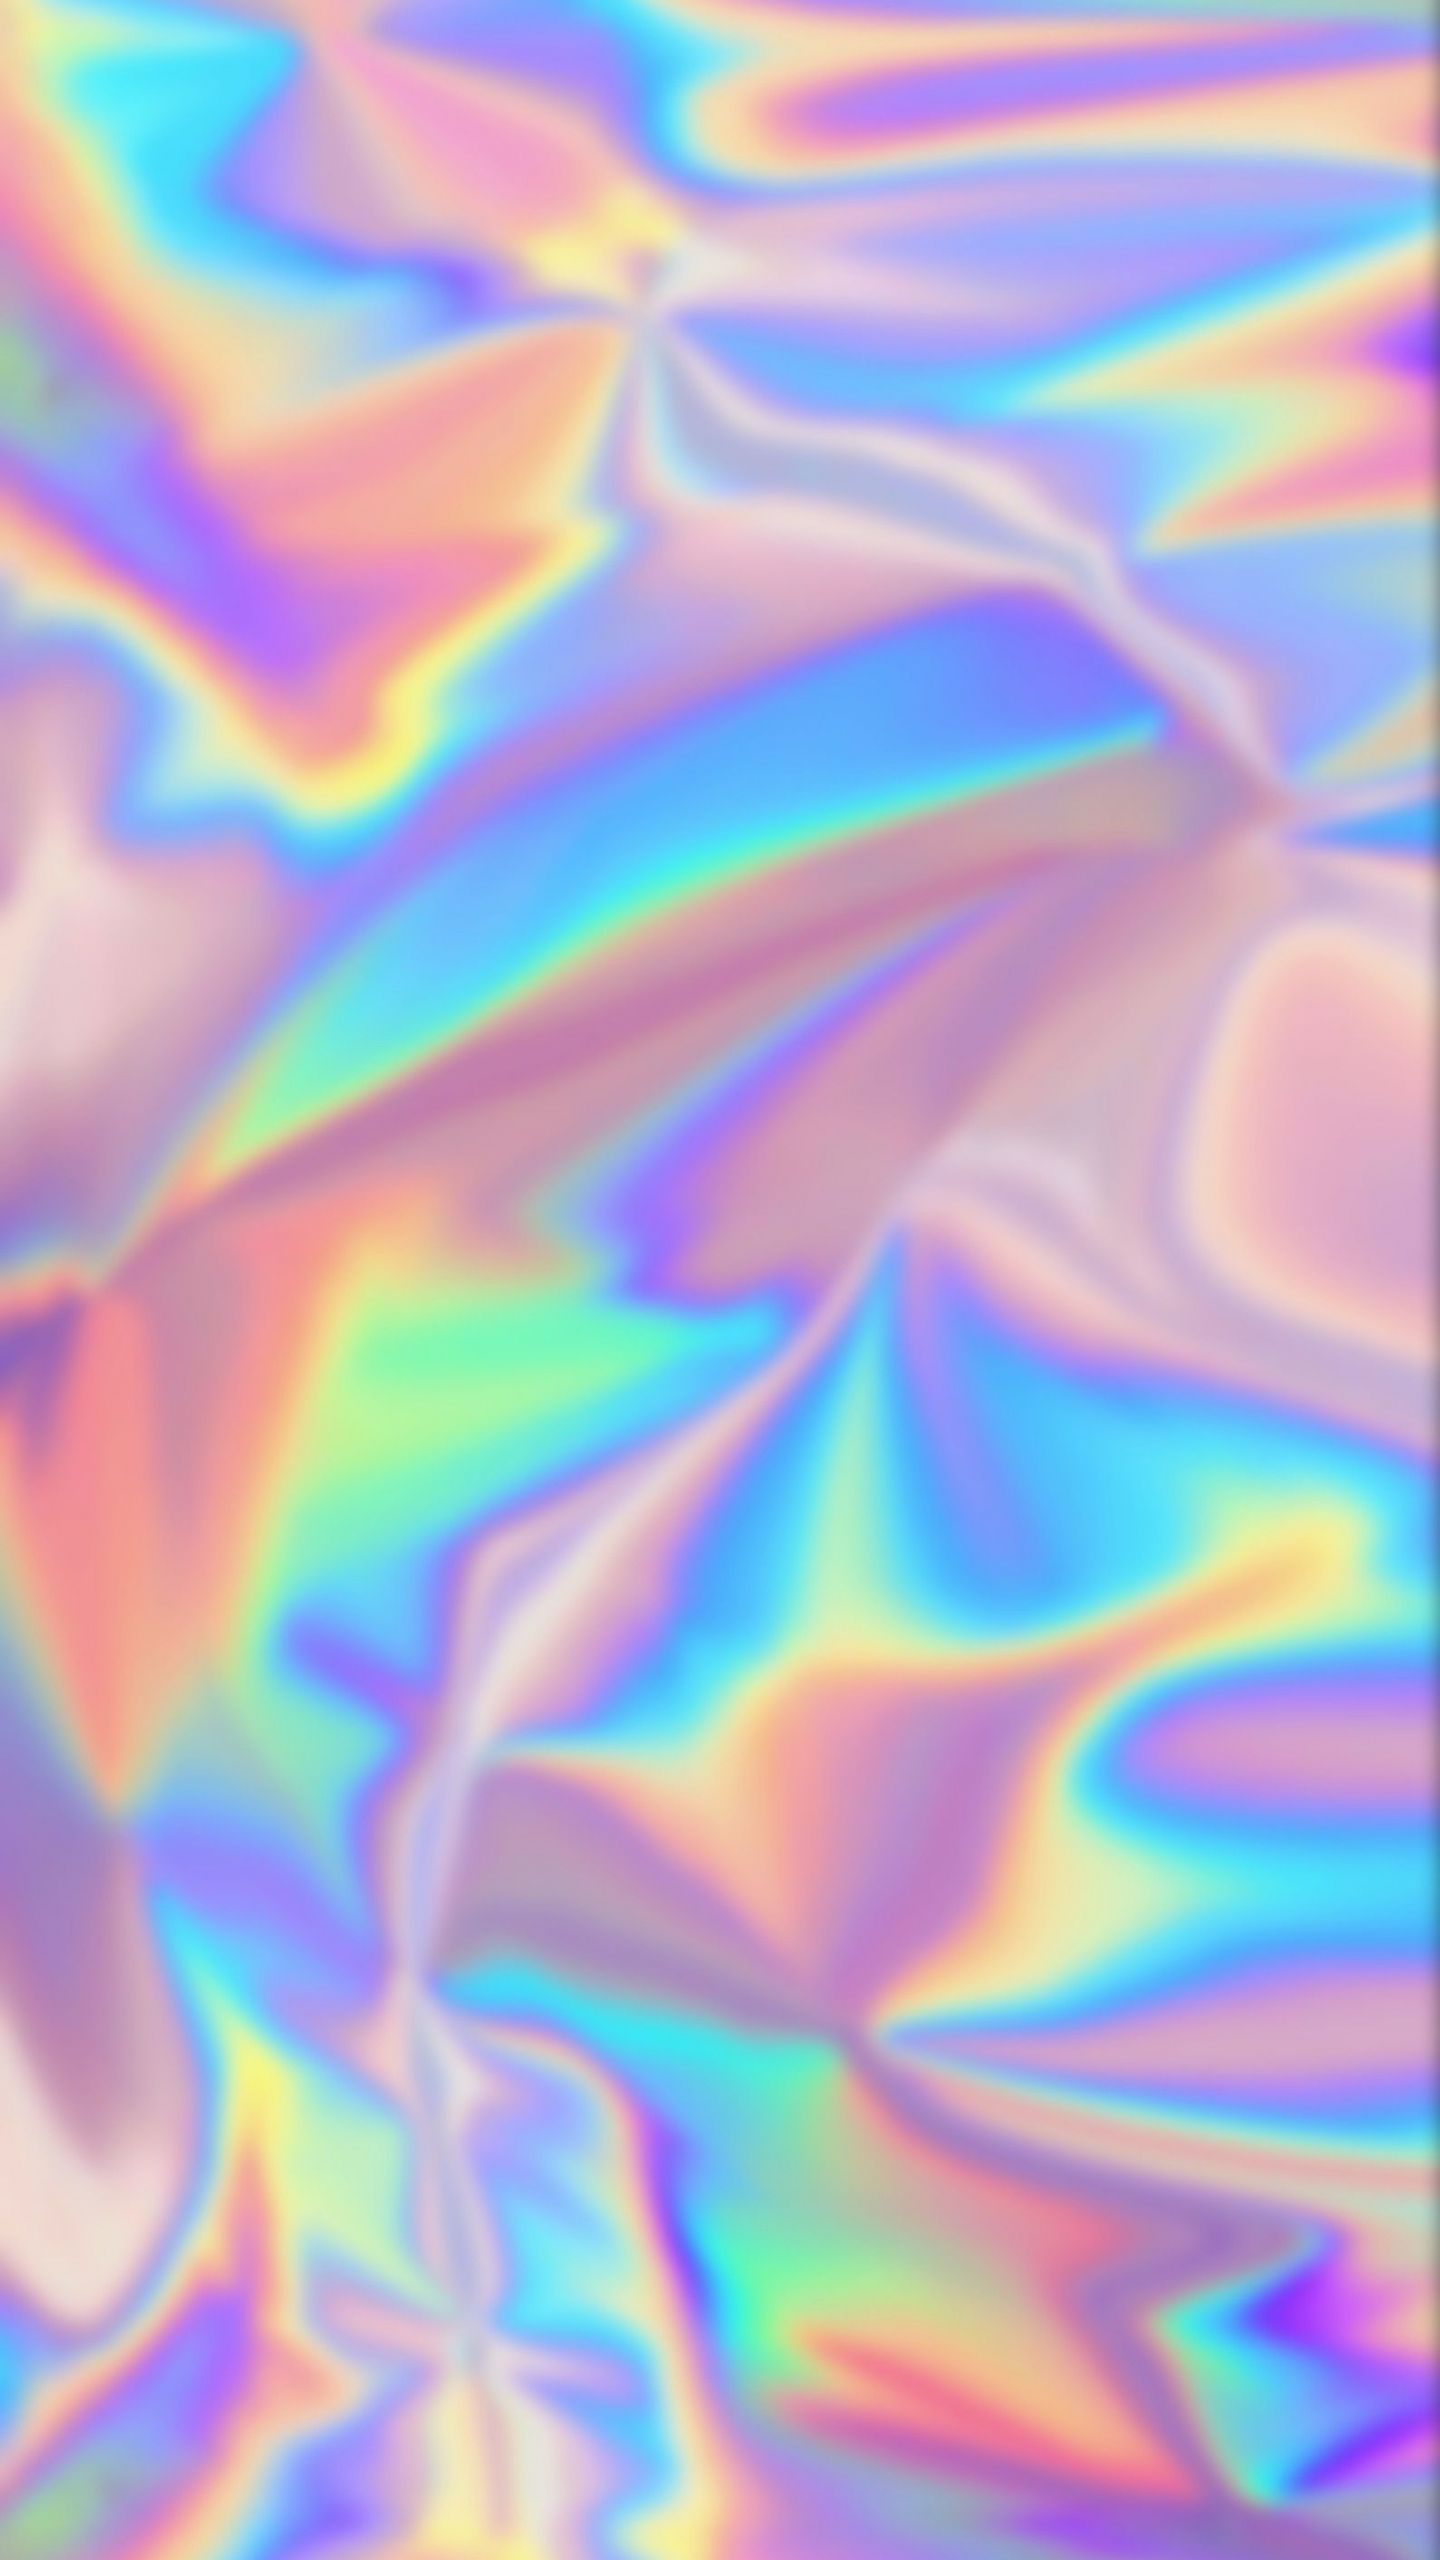 Free download Vaporwave aesthetic in 2019 Colorful wallpaper [1590x3000] for your Desktop, Mobile & Tablet. Explore Jada Background. Jada Background, Jada Pinkett Smith Wallpaper, Jada Pinkett Smith Wallpaper